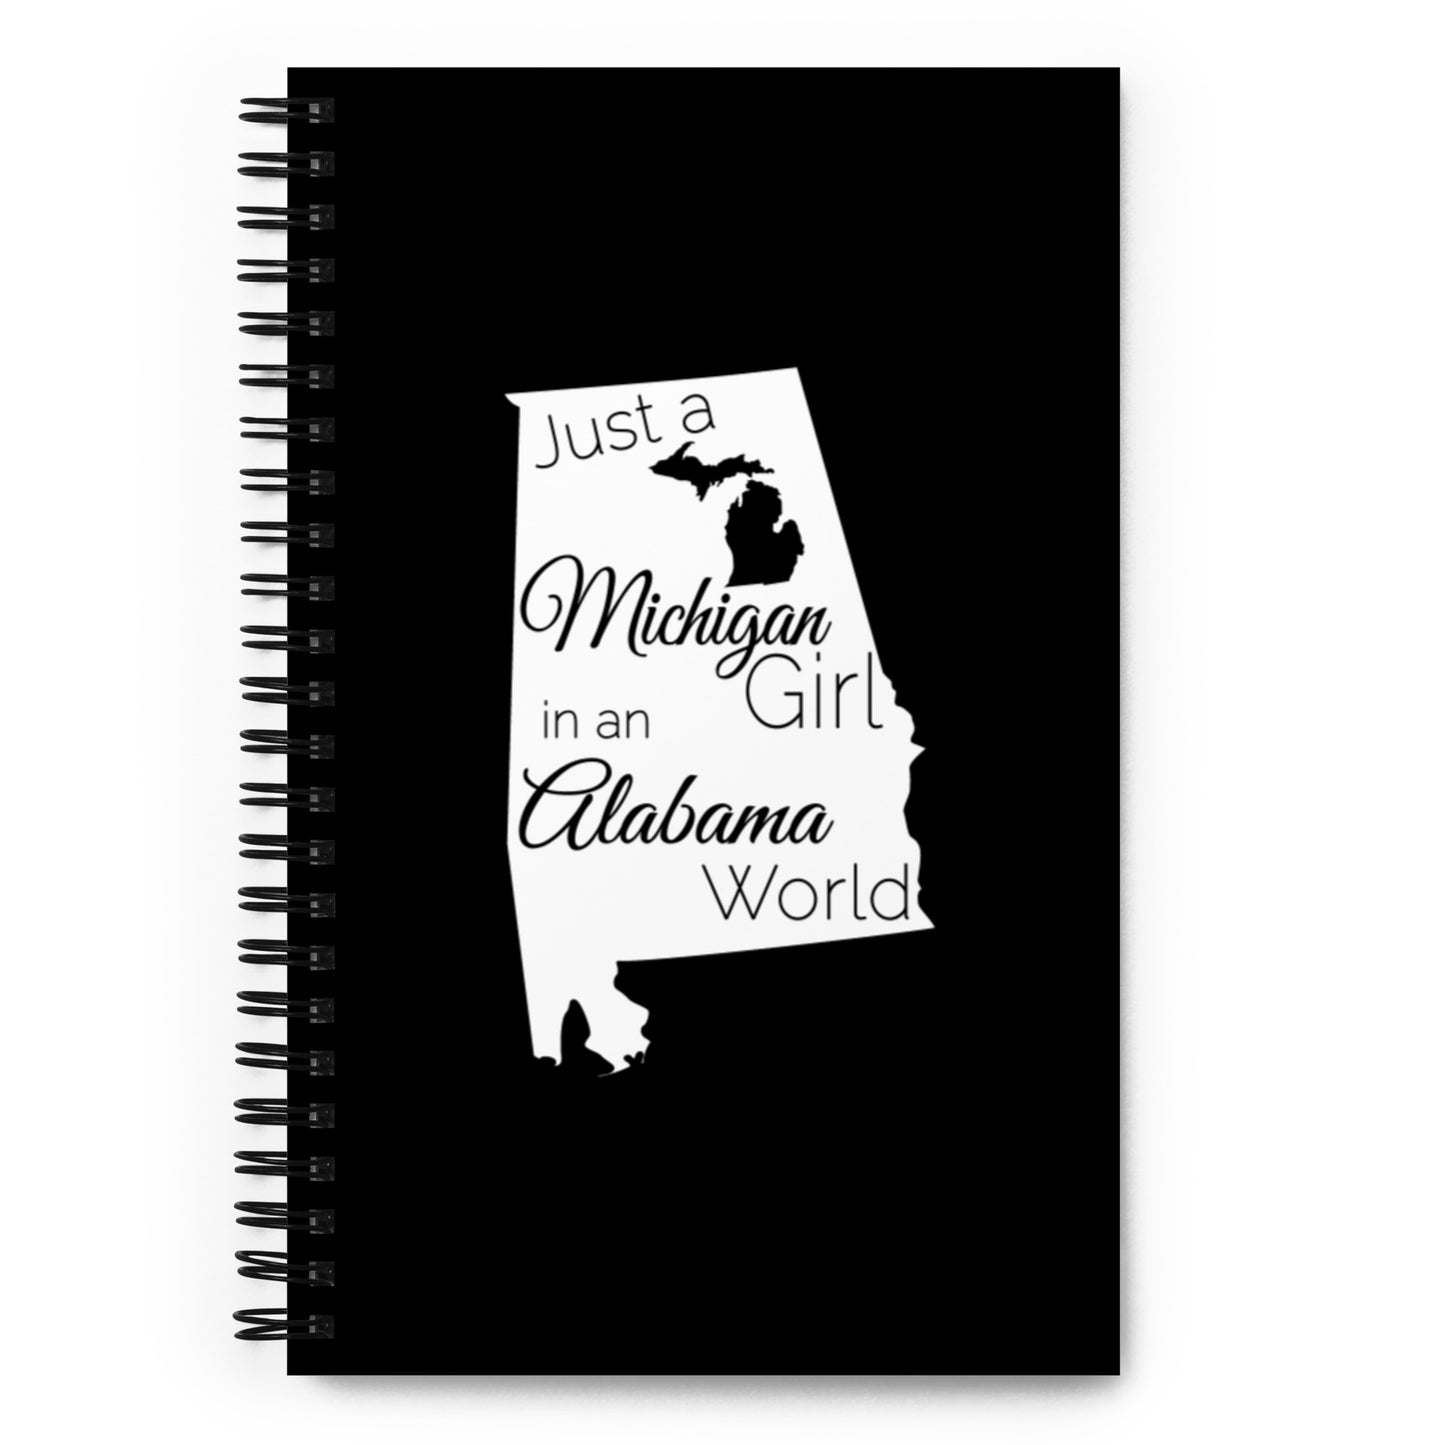 Just a Michigan Girl in an Alabama World Spiral notebook